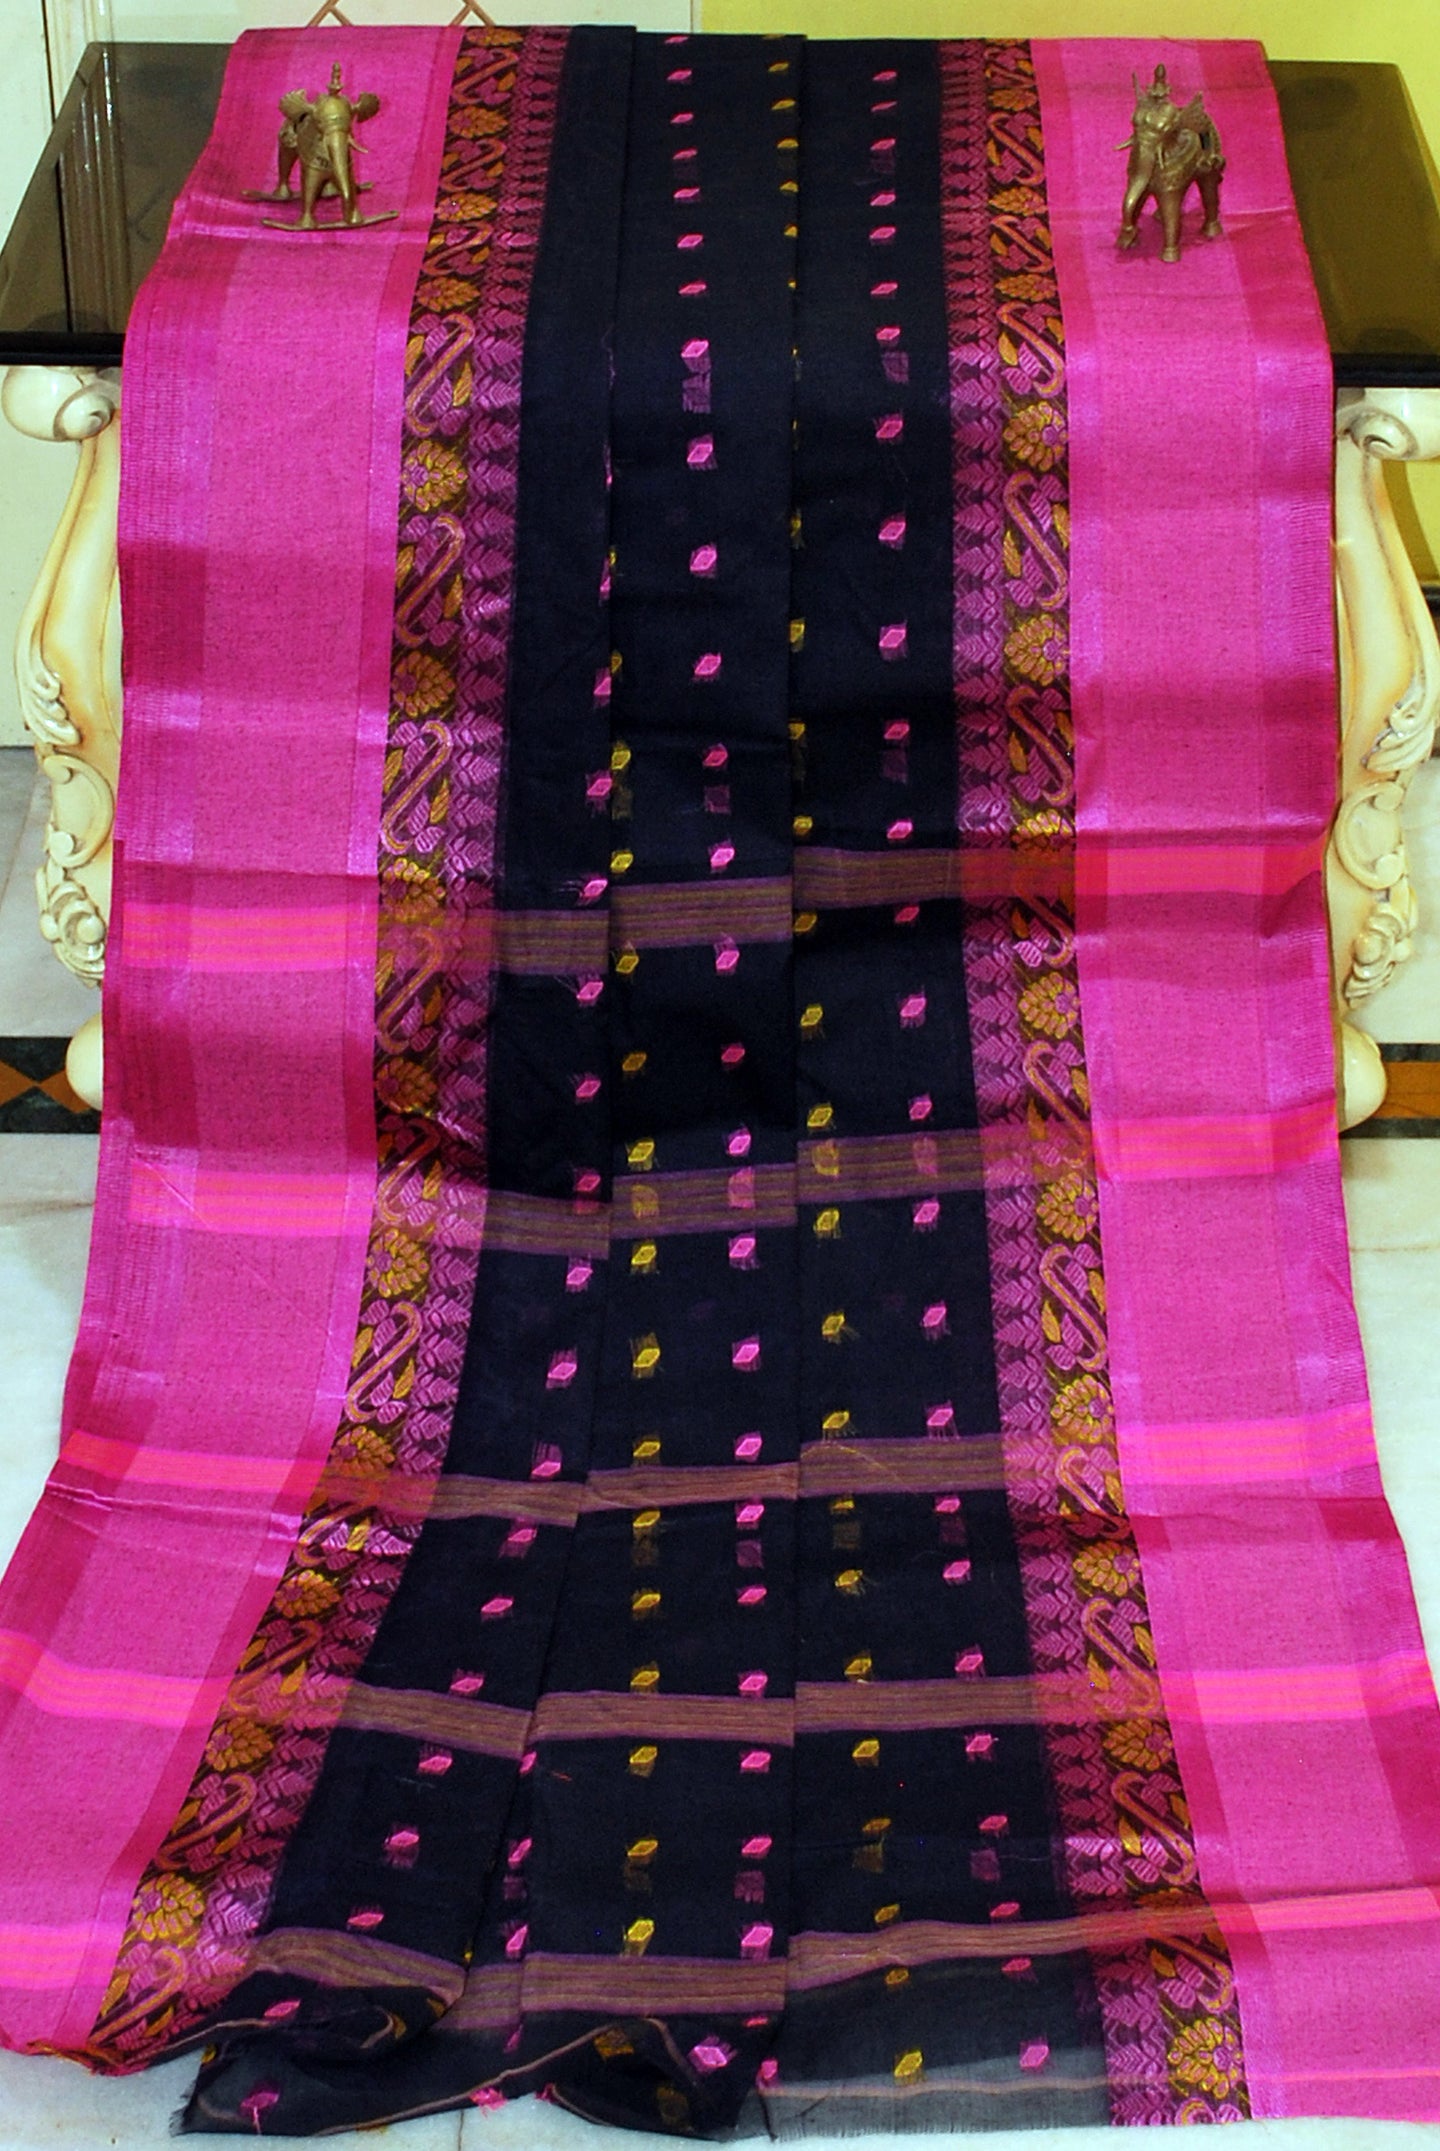 Bengal Handloom Cotton Hazar Buti Saree in Midnight Blue, Hot Pink and Yellow